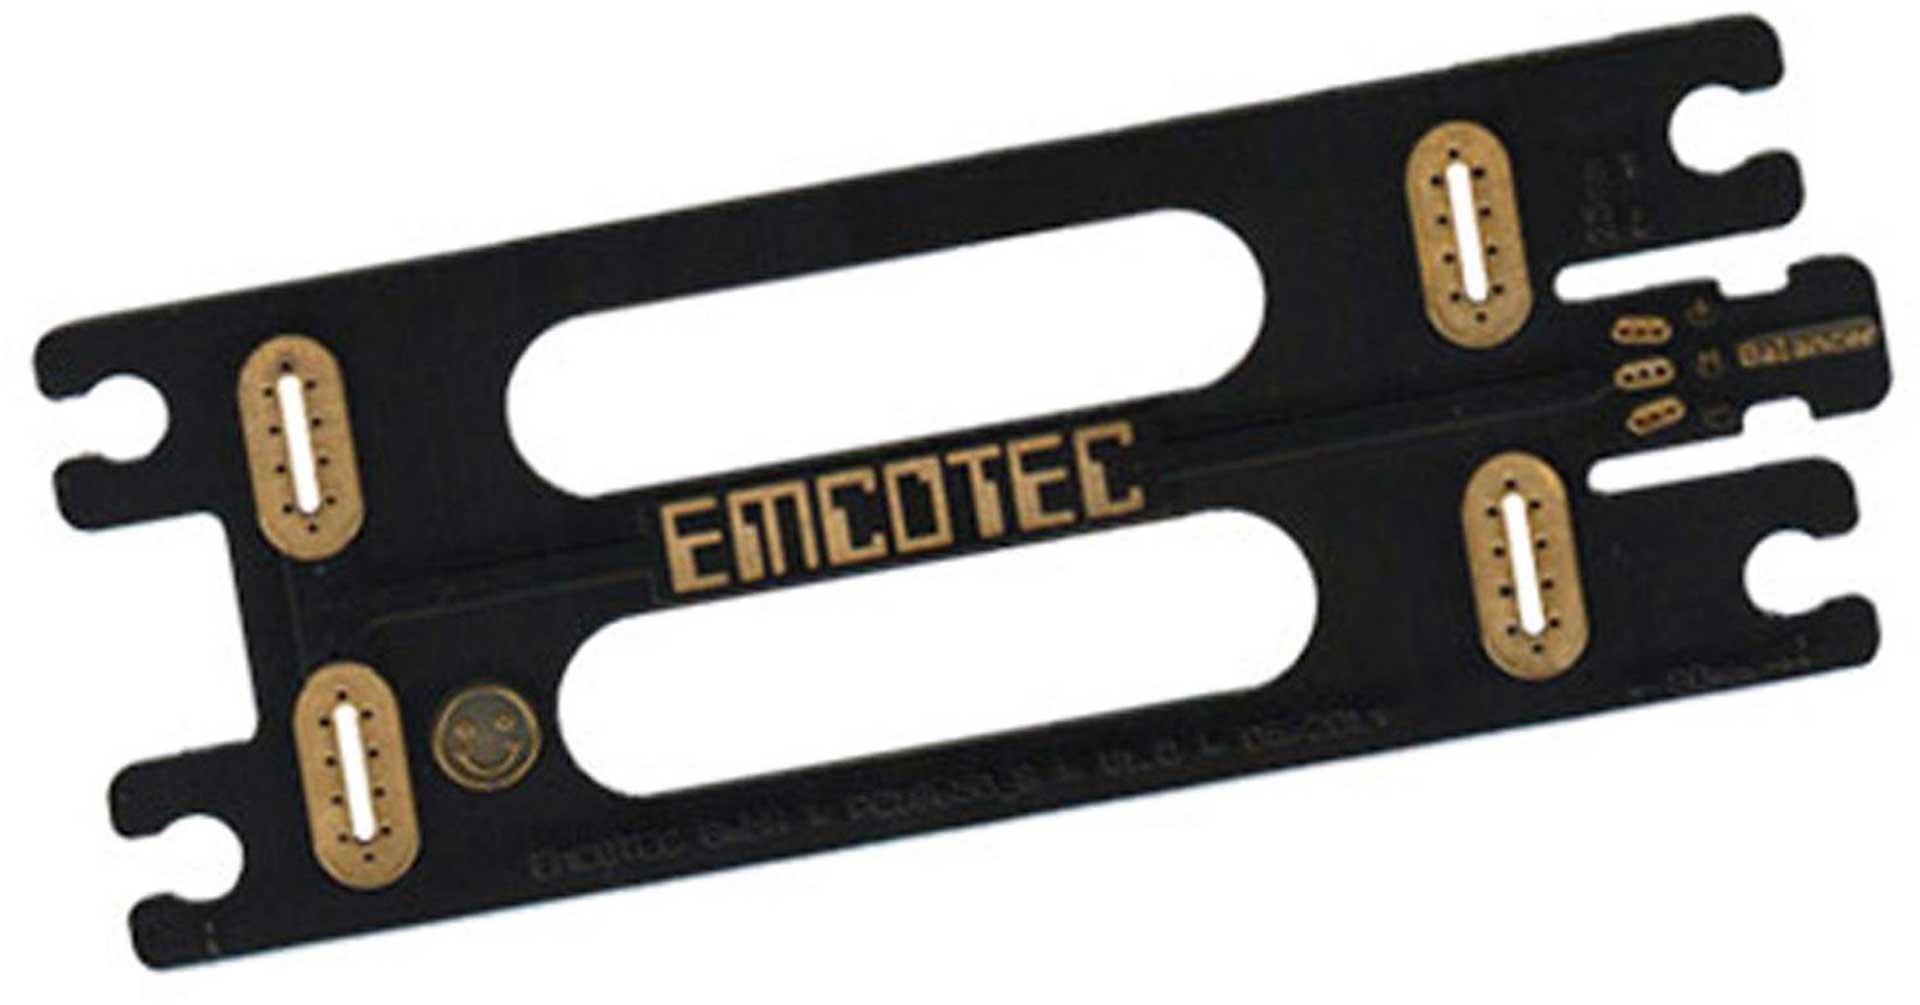 EMCOTEC accu -LÖT-PLATINE "COMPACT" OHNE STECKER